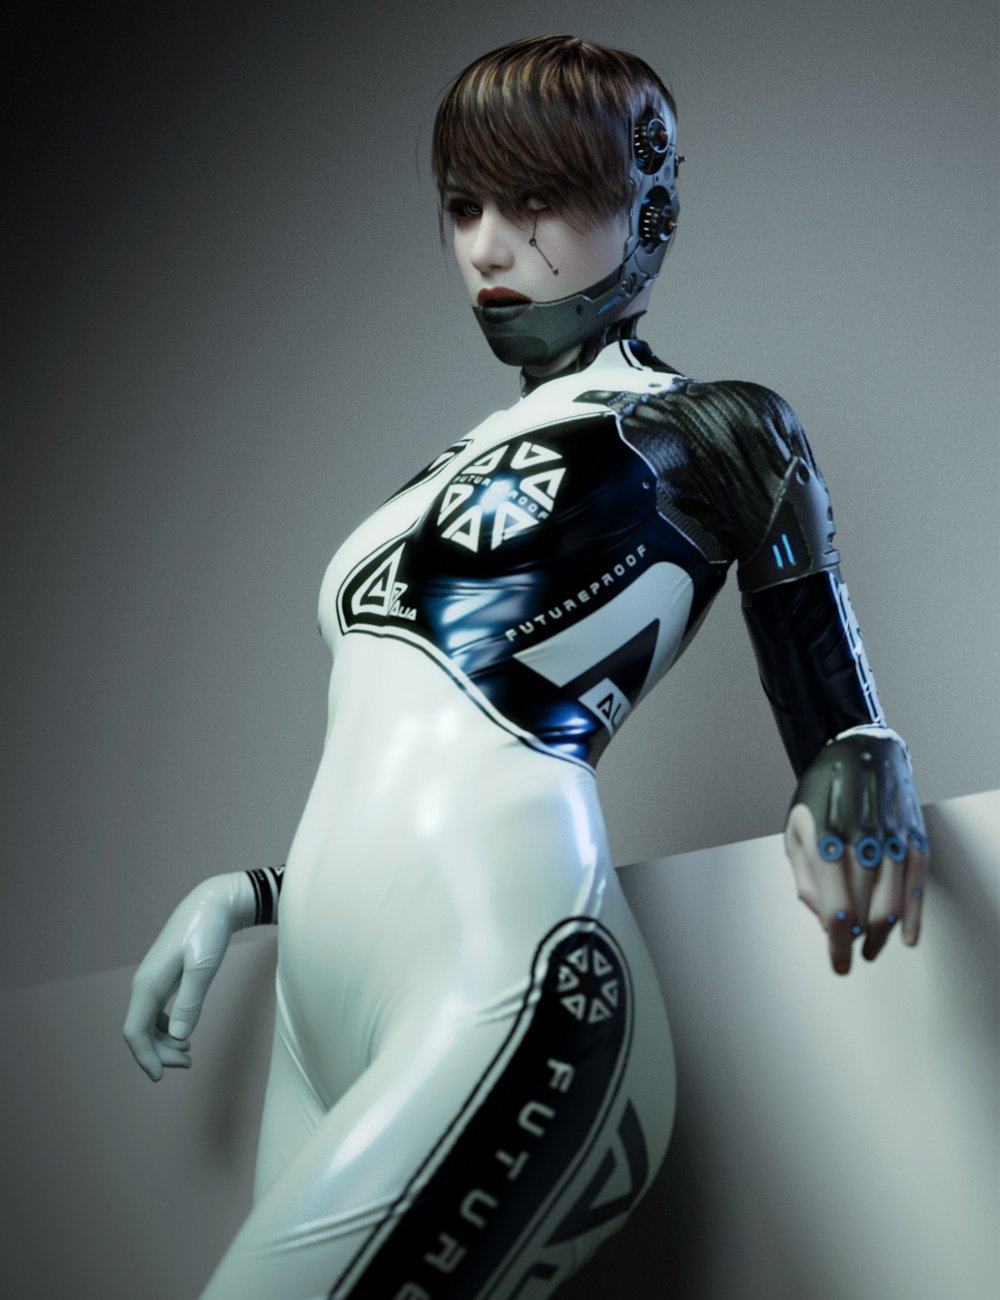 Alia Lvl 4 HD Morphs for Genesis 8 Female by: daveyabbo, 3D Models by Daz 3D